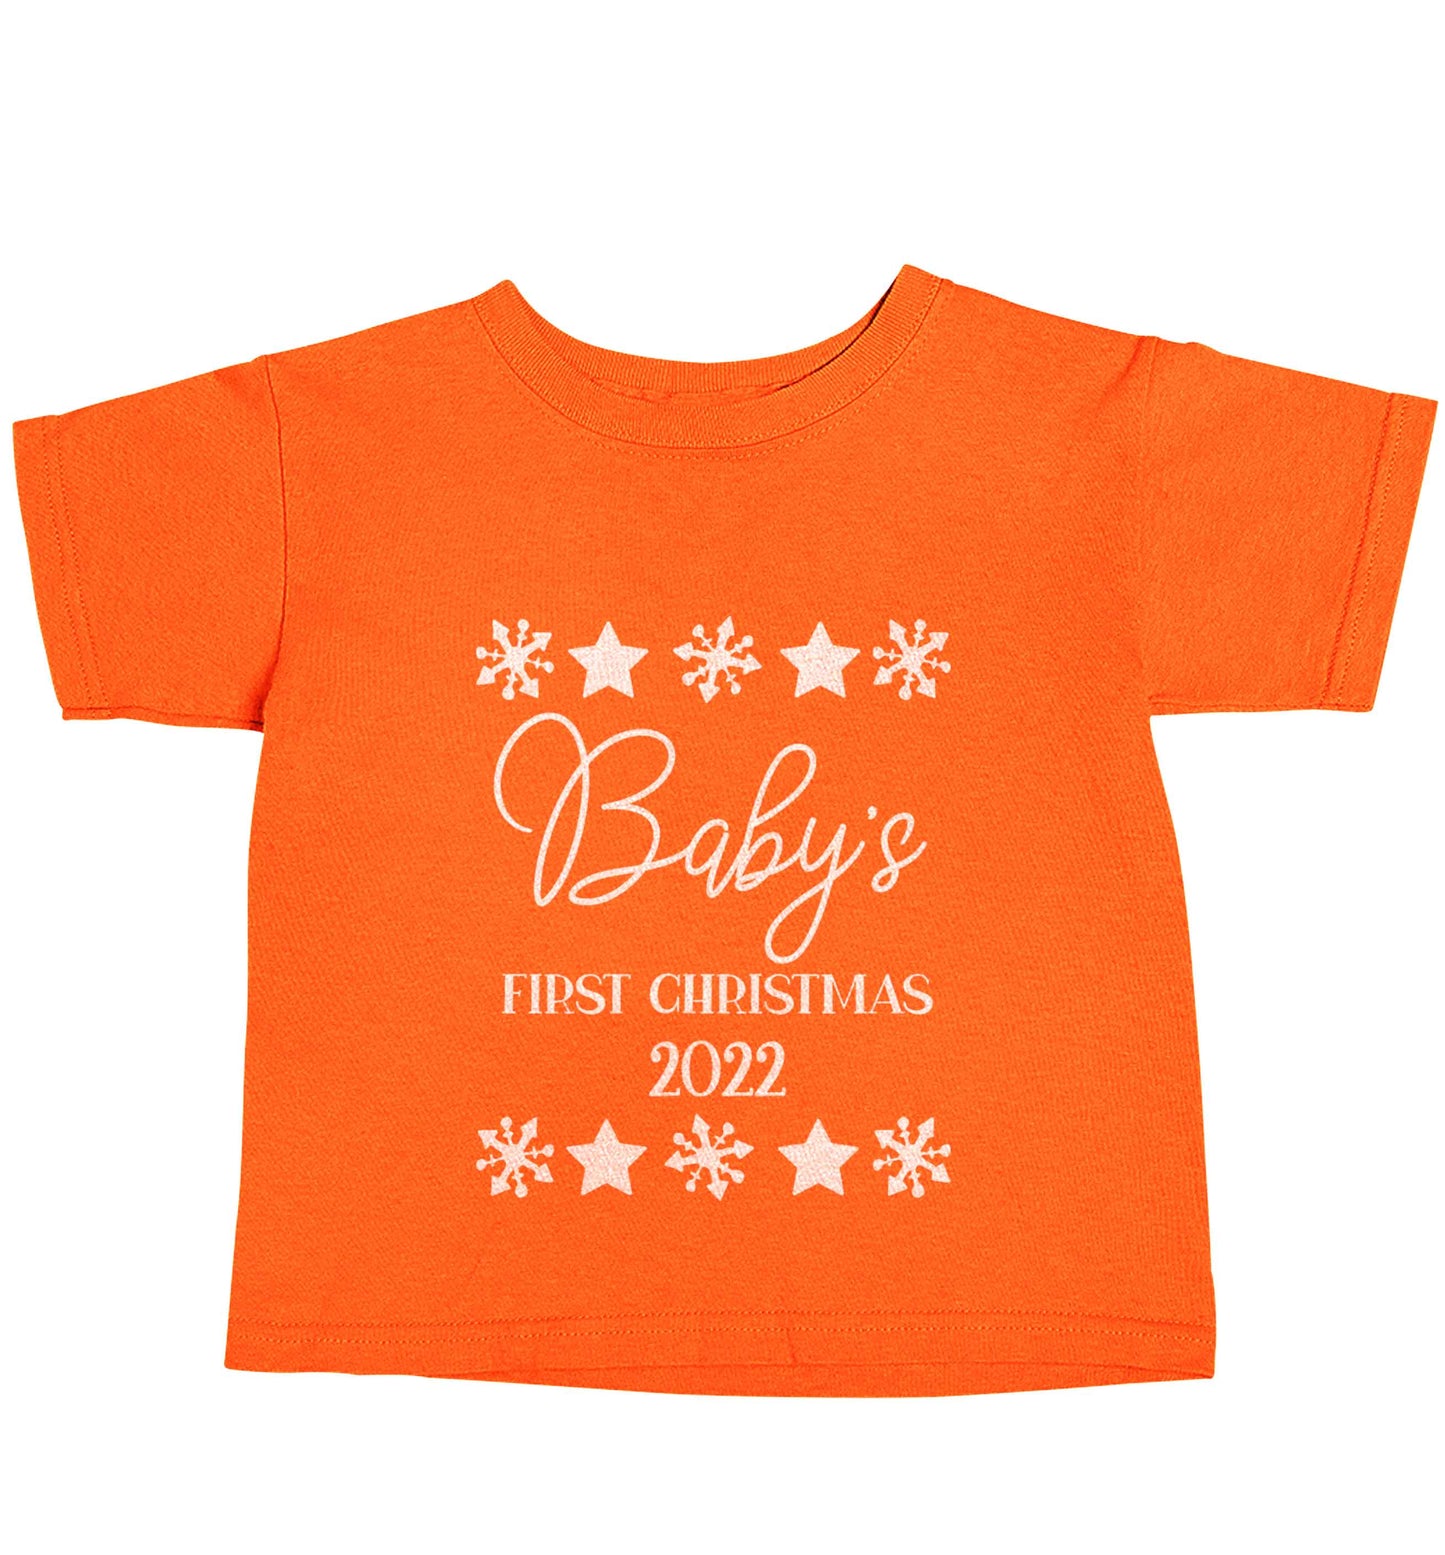 Baby's first Christmas orange baby toddler Tshirt 2 Years